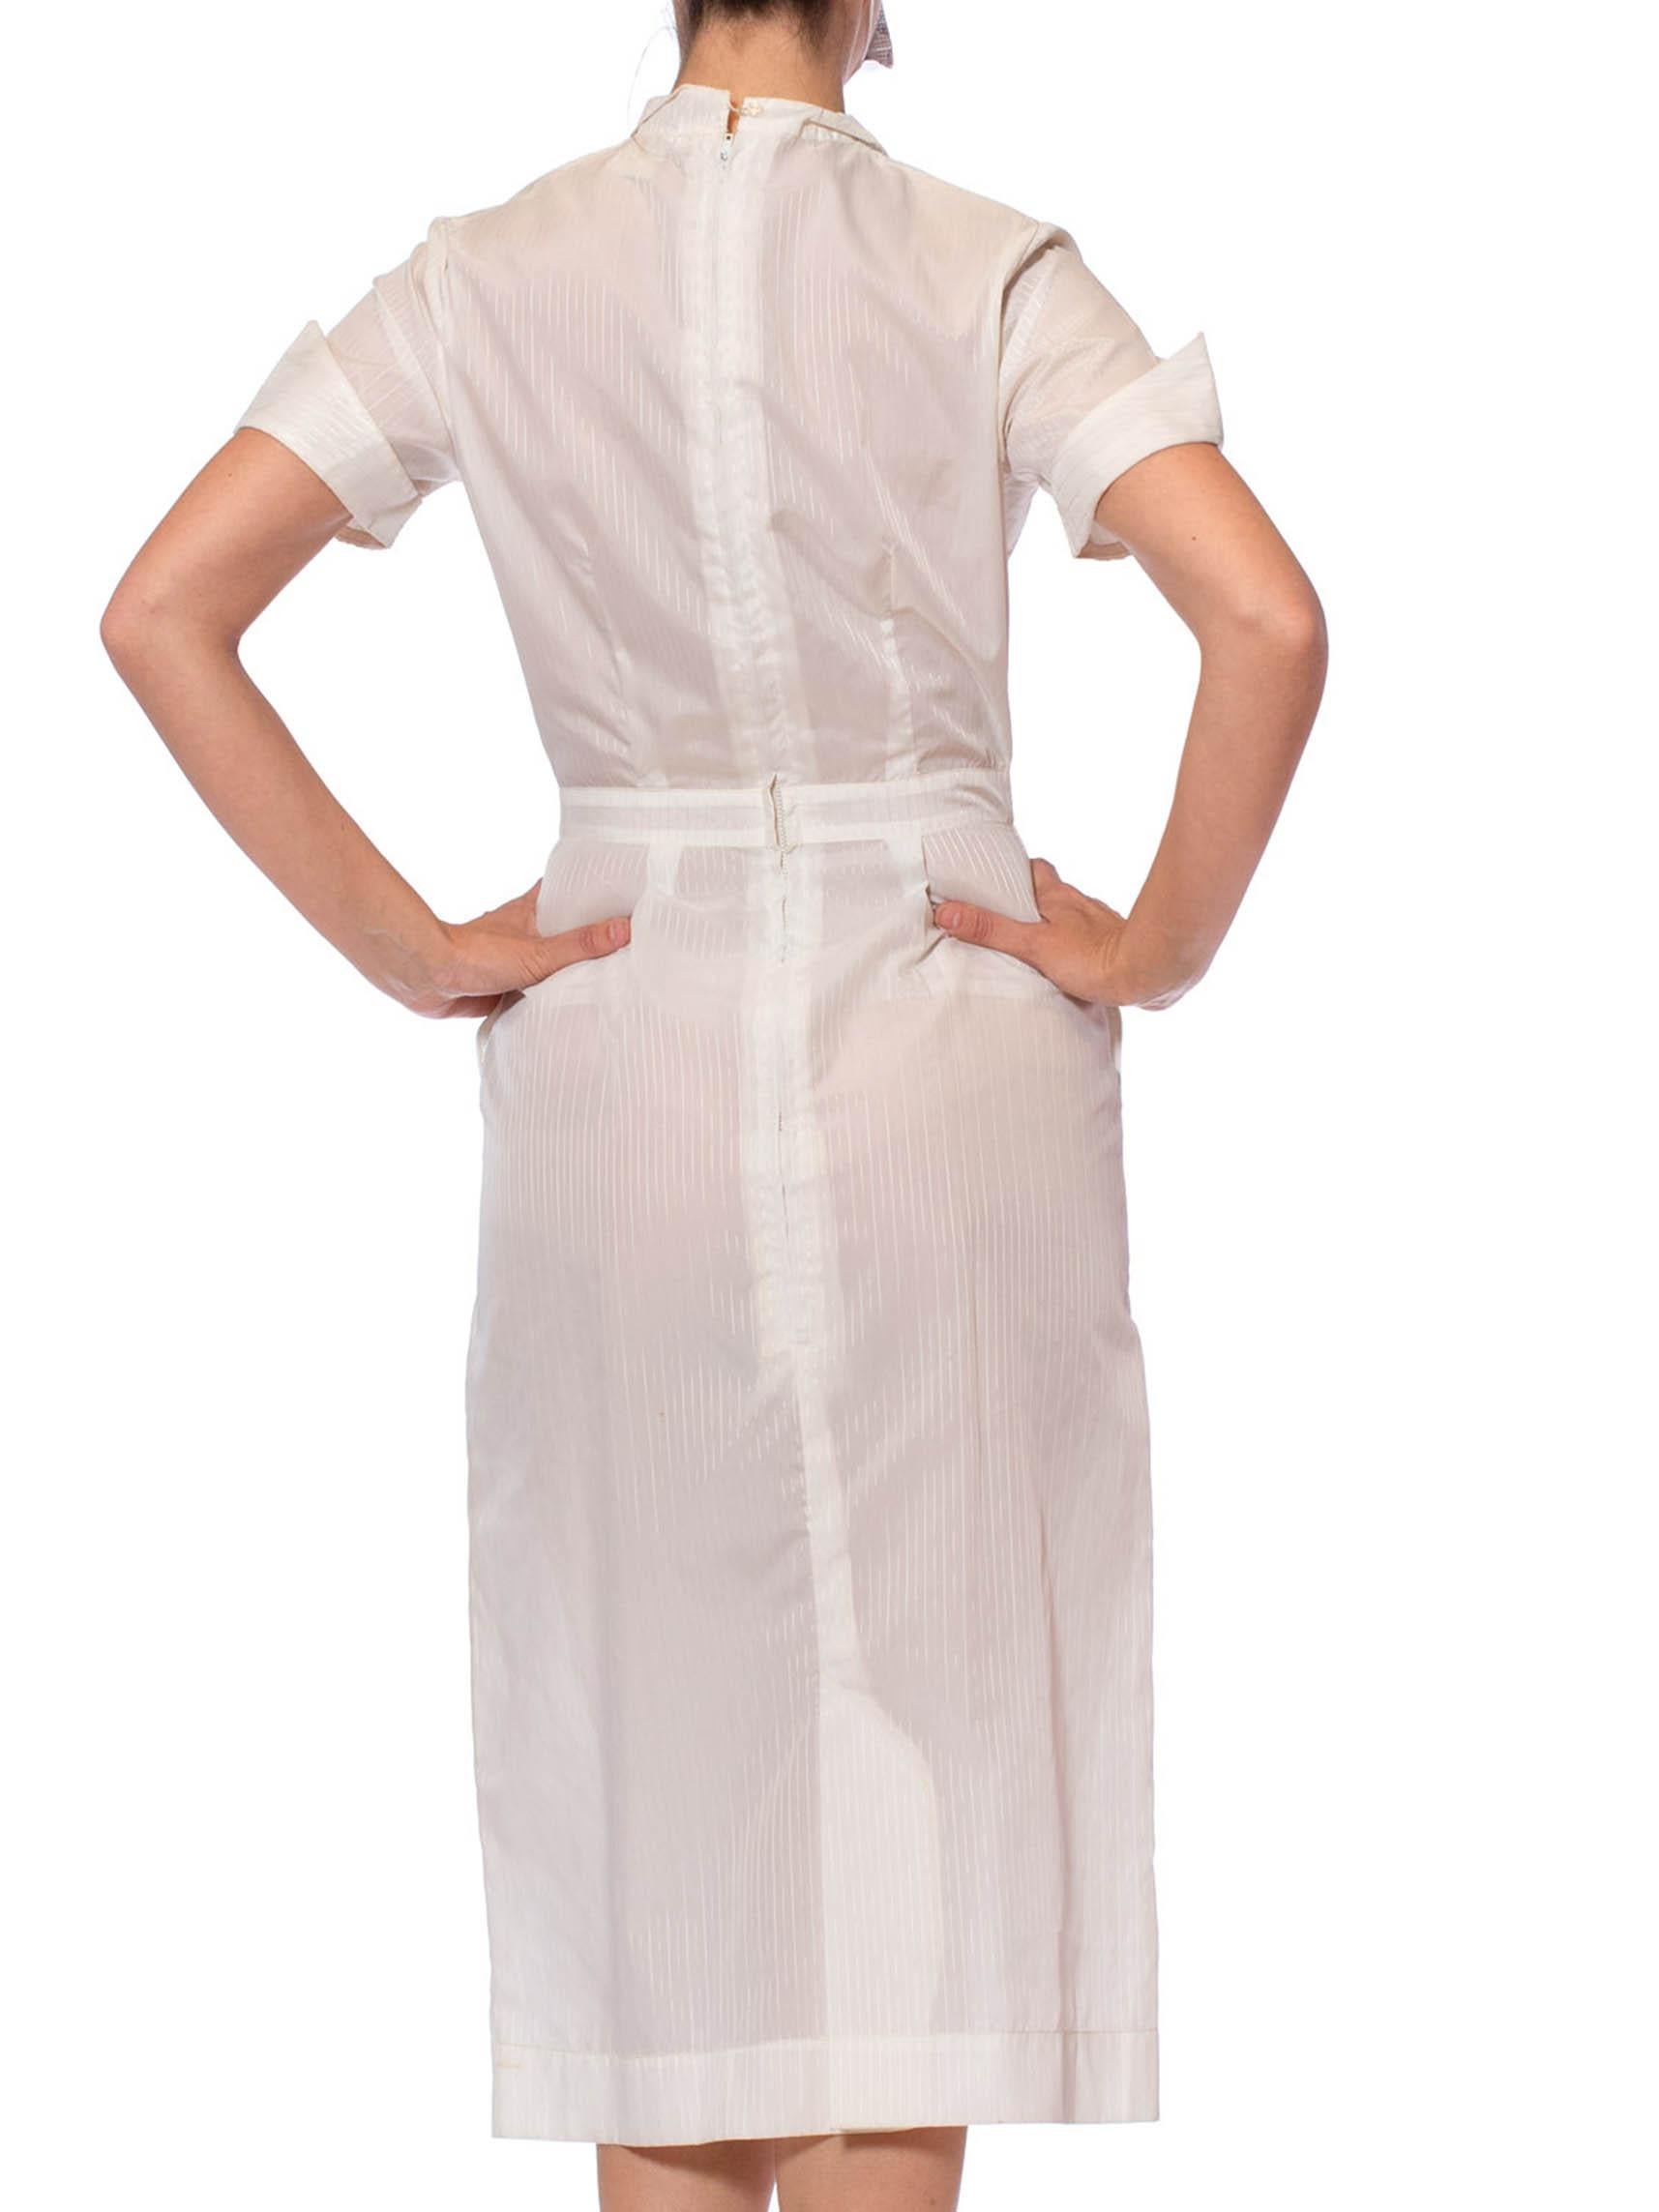 1950S White Nylon Pin-Up Nurse Uniform Dress 2